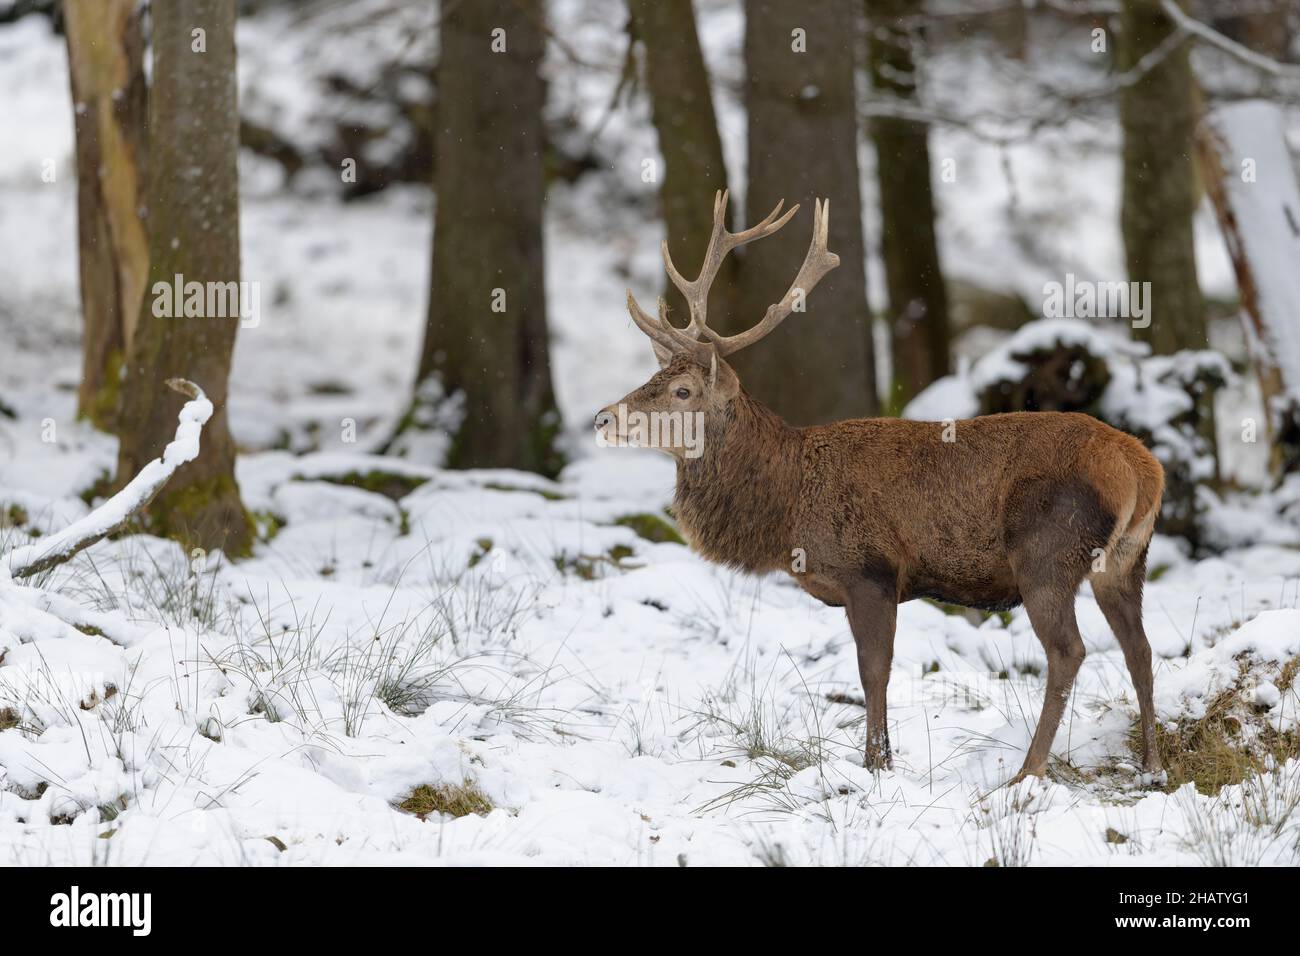 Rothirsch, Cervus elaphus, Red deer in Snow Stock Photo